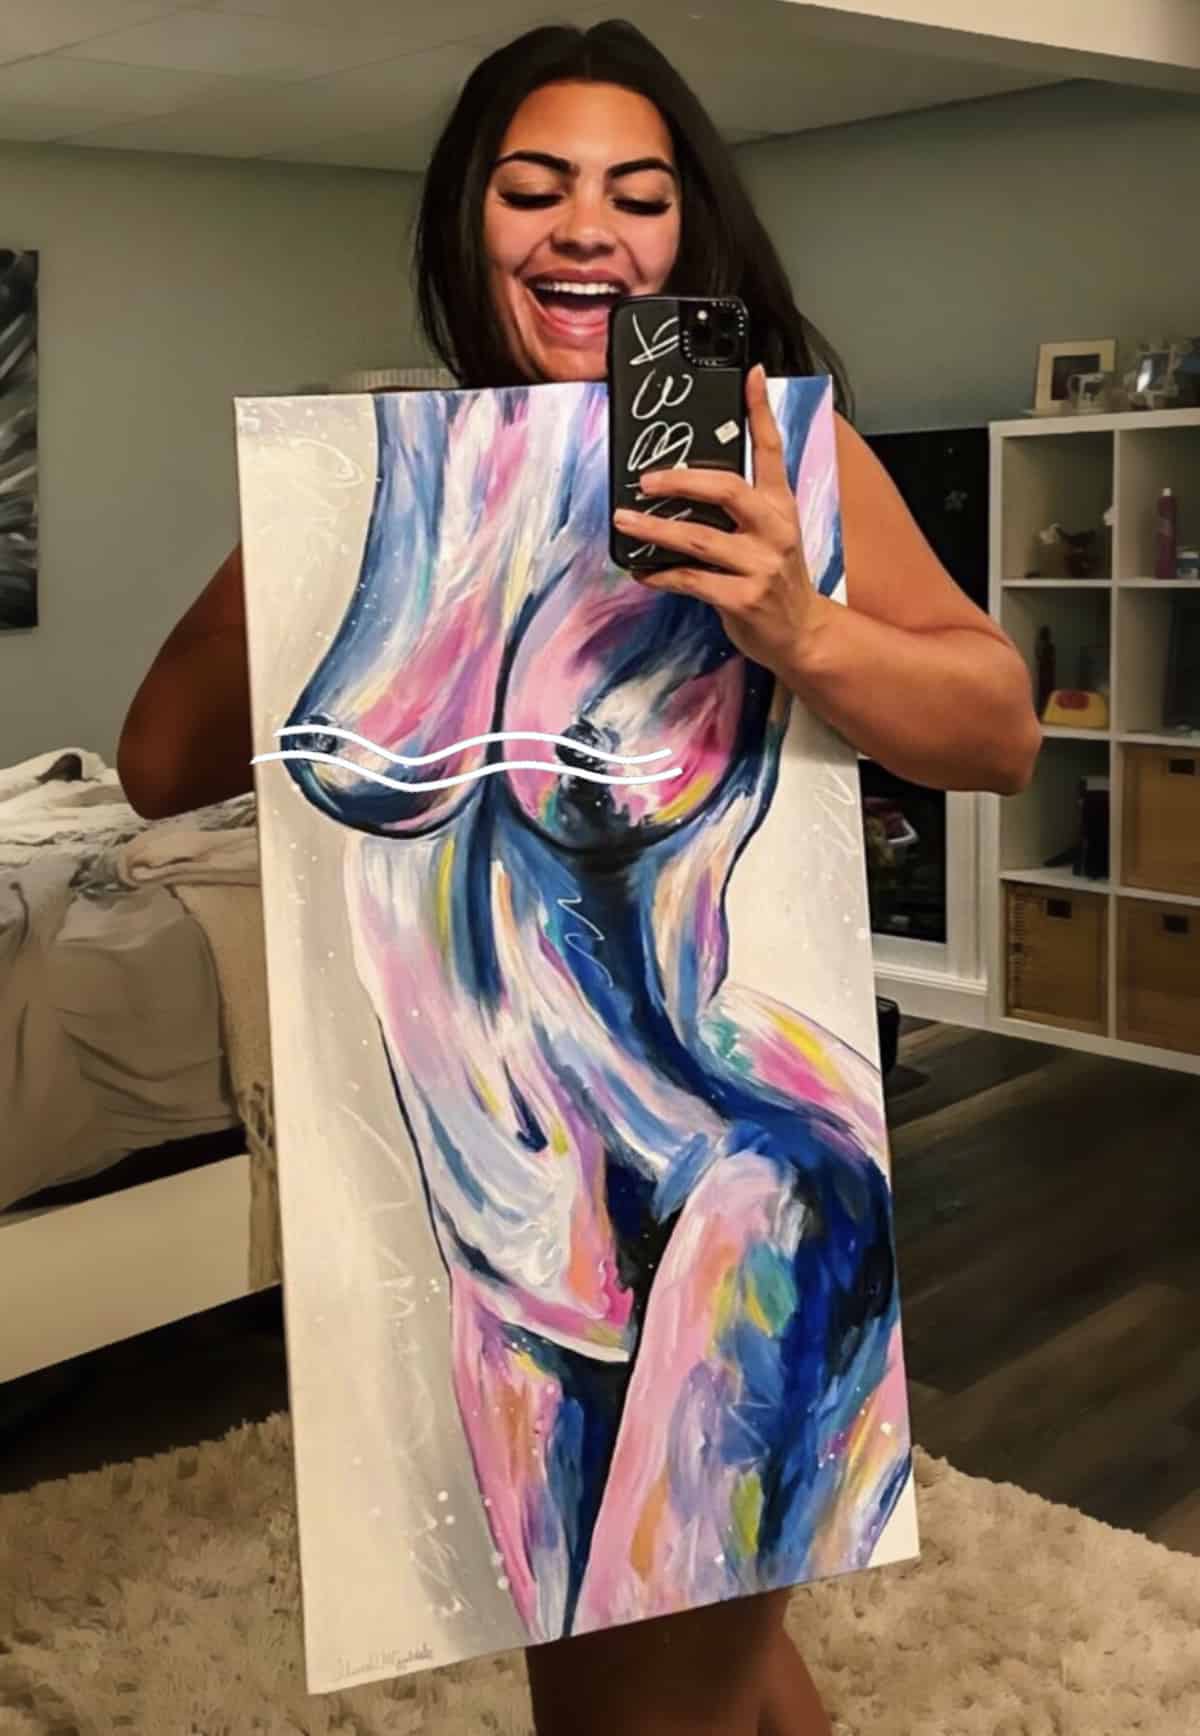 Art Customer Posing With Painting Female Body Art